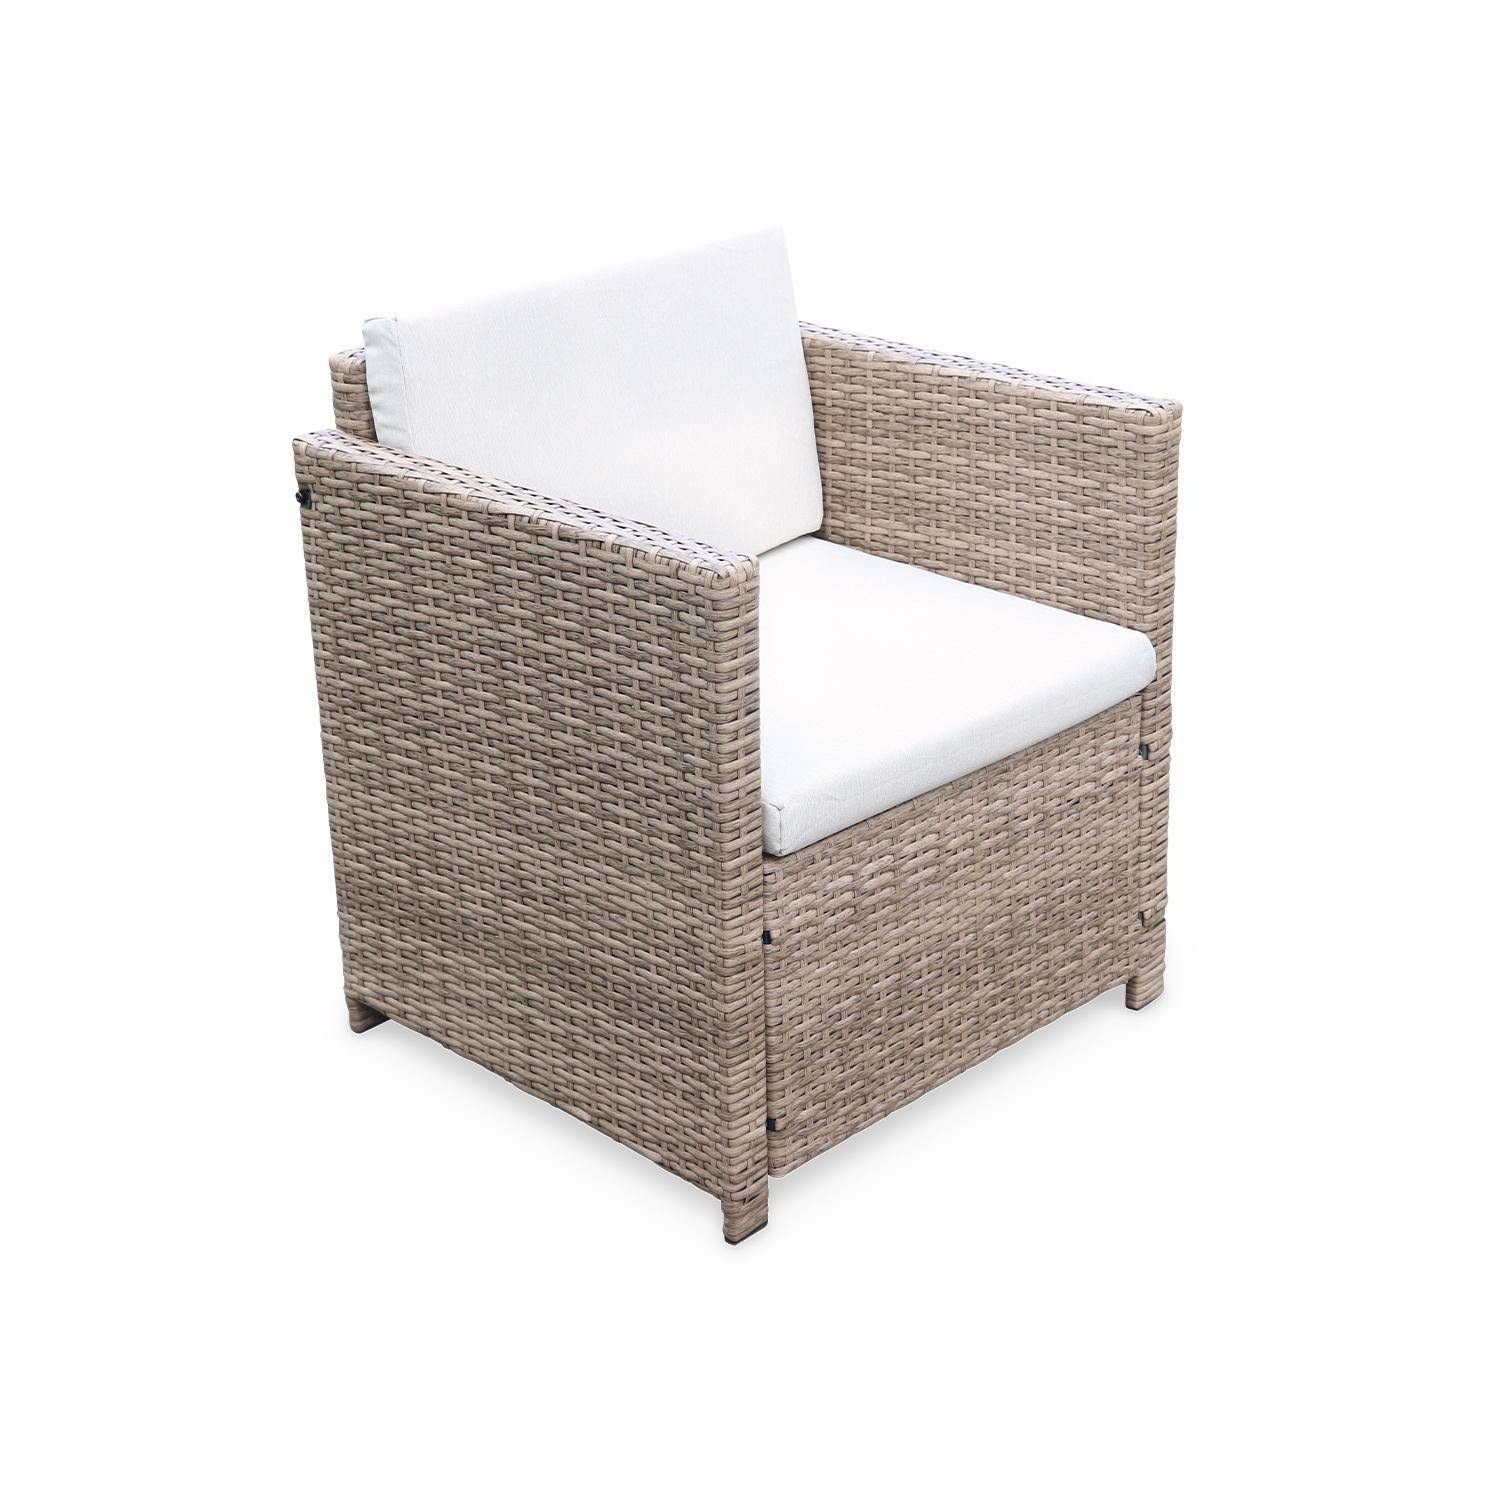 4-seater polyrattan garden sofa set - sofa, 2 armchairs, coffee table - Perugia - Natural Beige rattan, Beige cushions,sweeek,Photo6